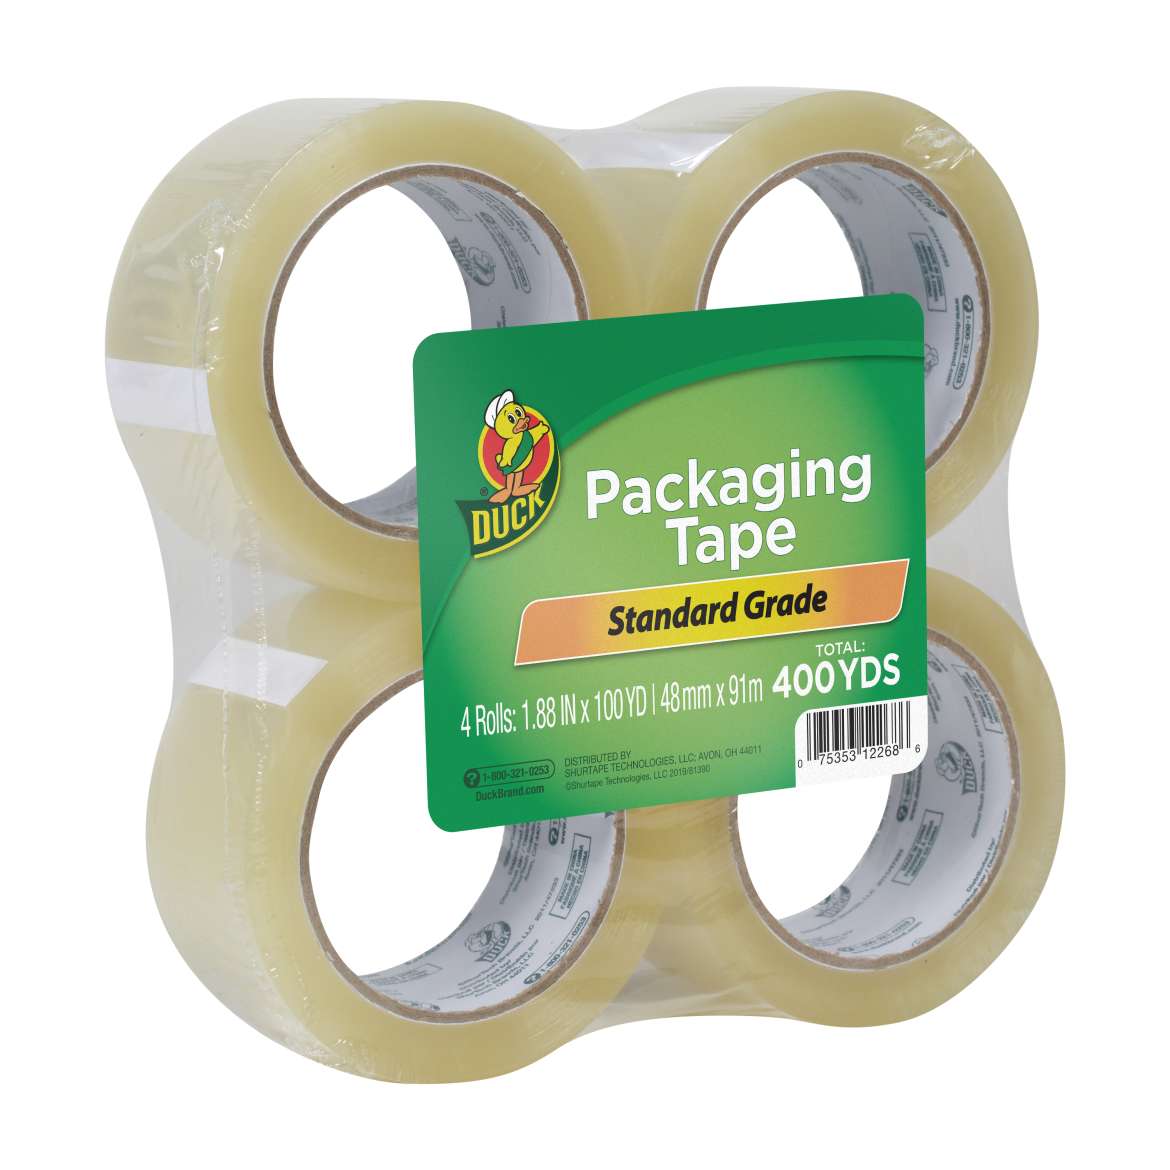 Standard Grade Packing Tape